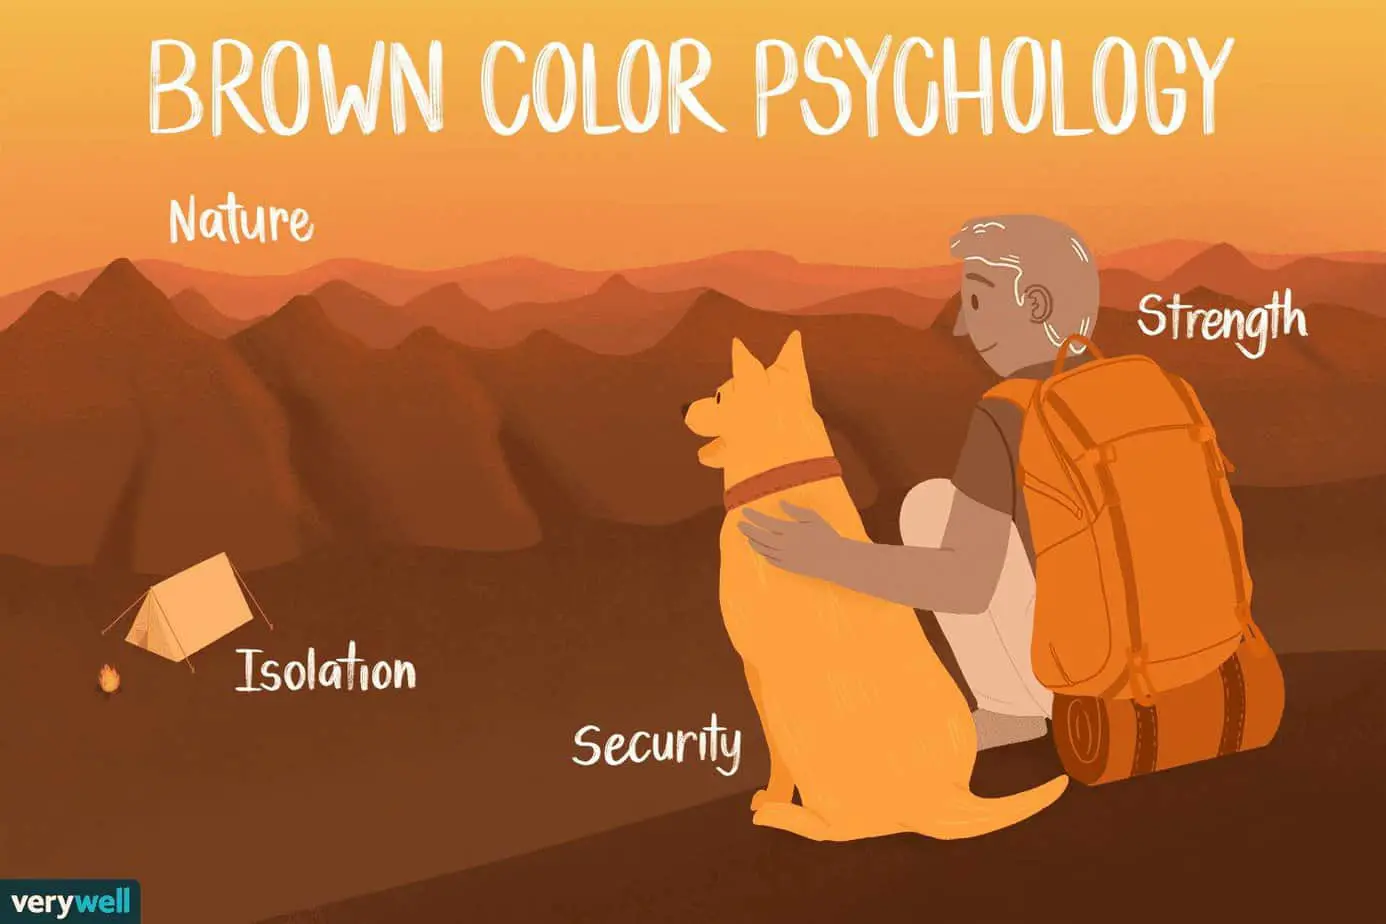 Brown As A Negative Color